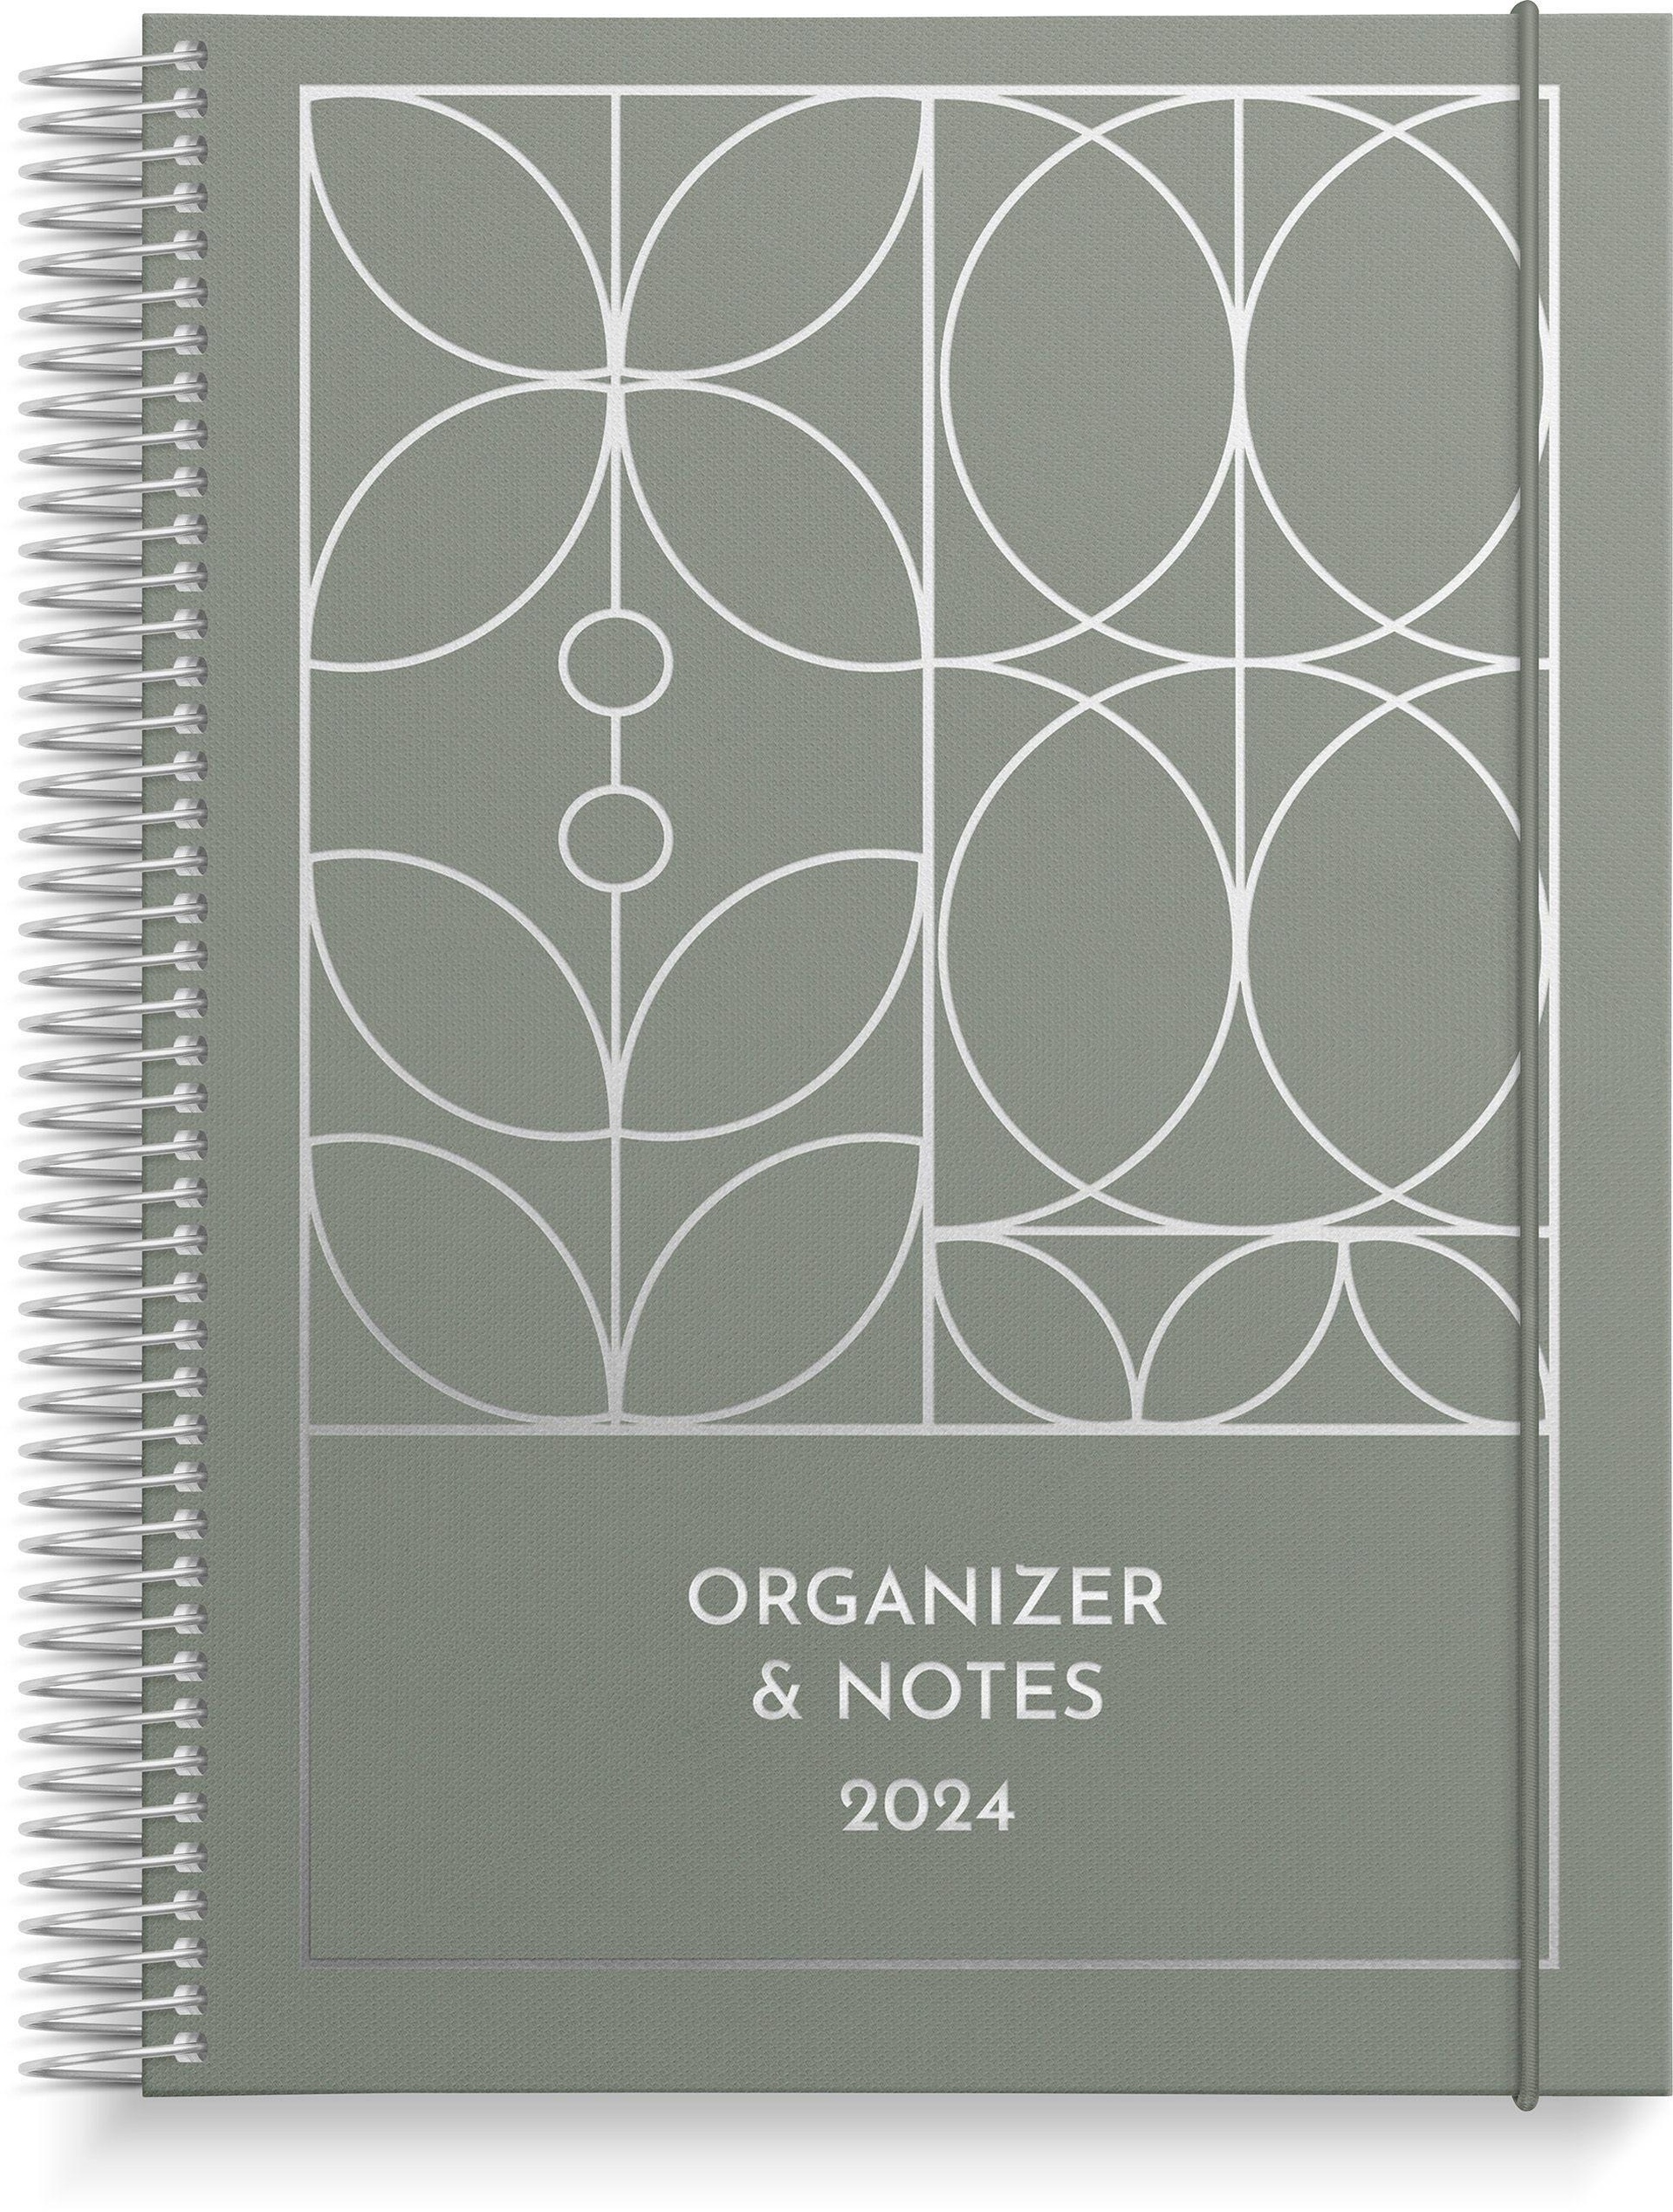 Burde Organizer & Notes Kalender 2024 - Kalender bei